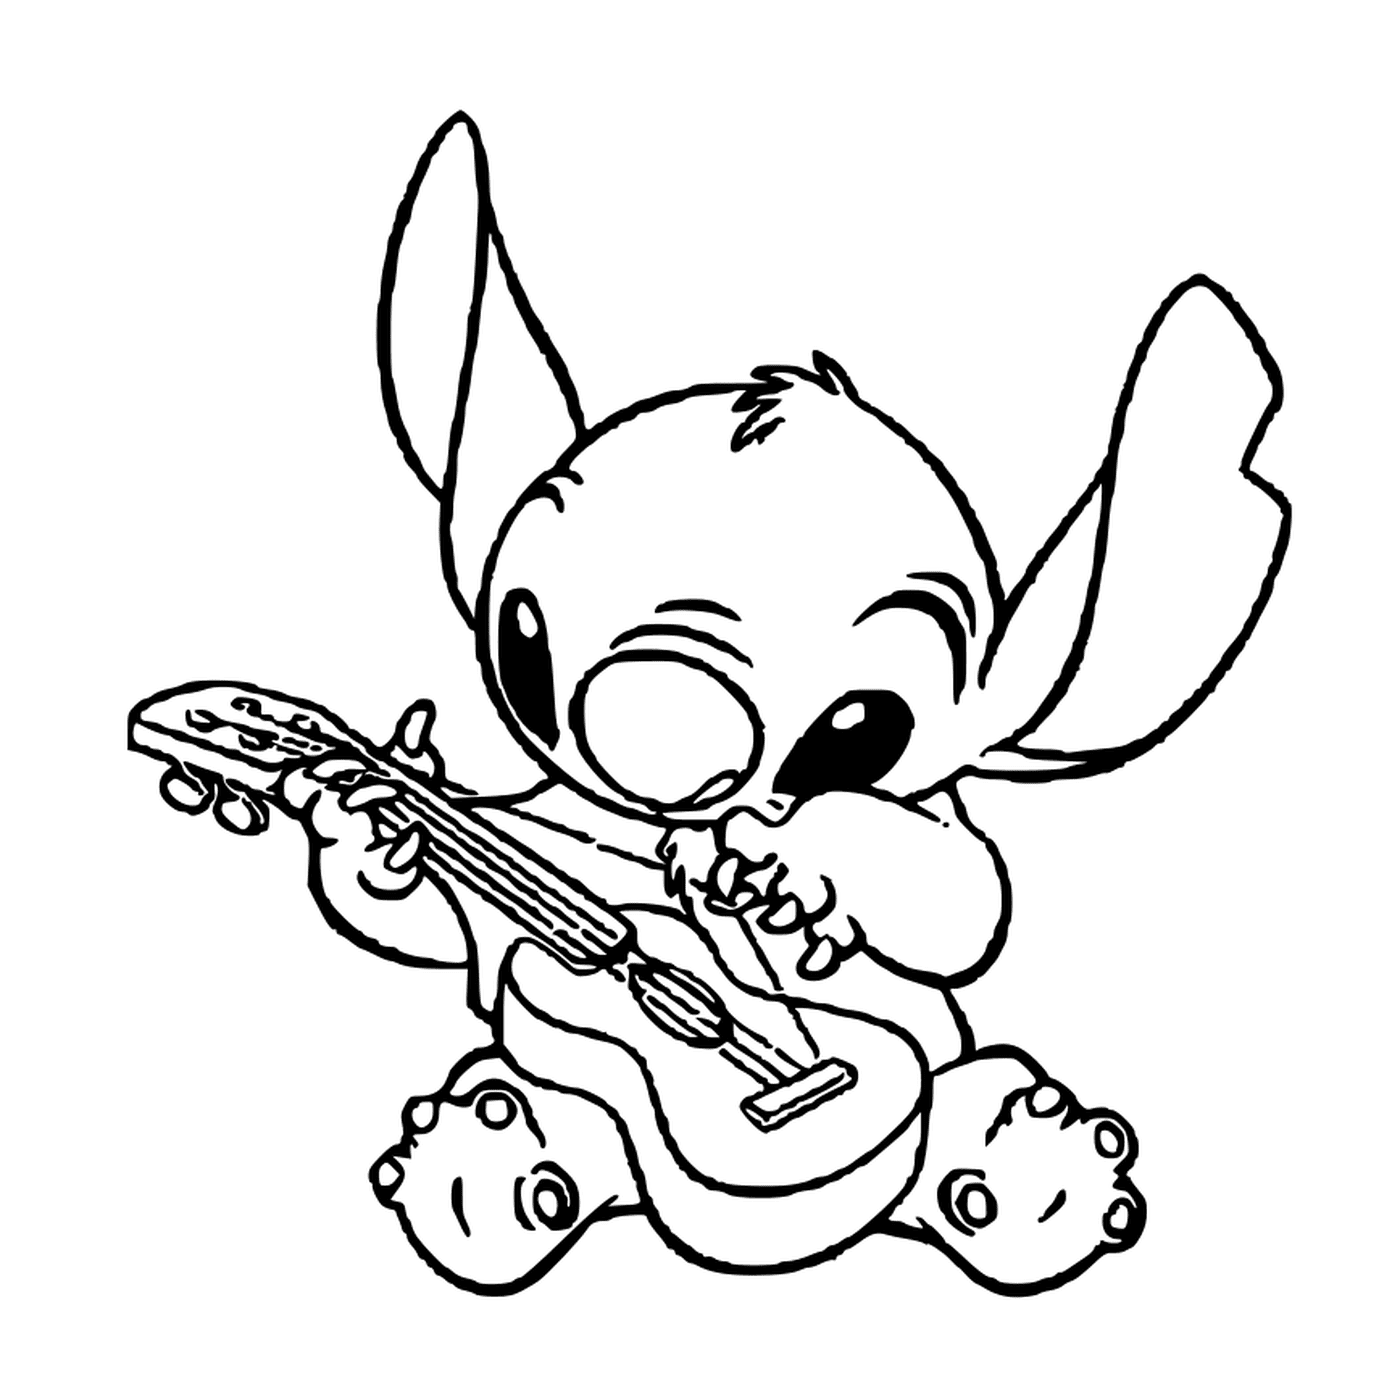  Stitch plays guitar 